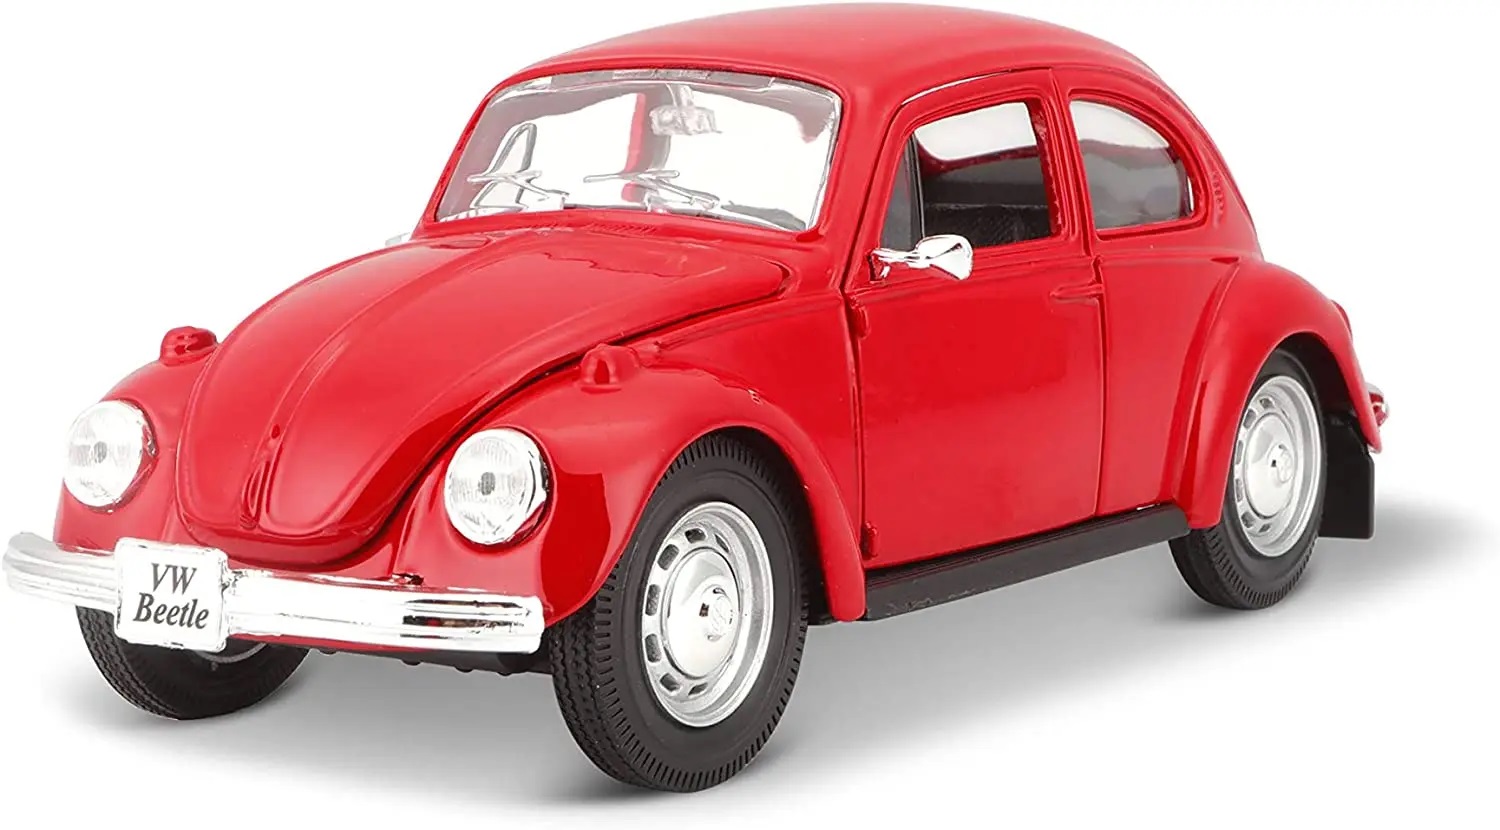 Maisto Volkswagen Beetle Scale 1:24